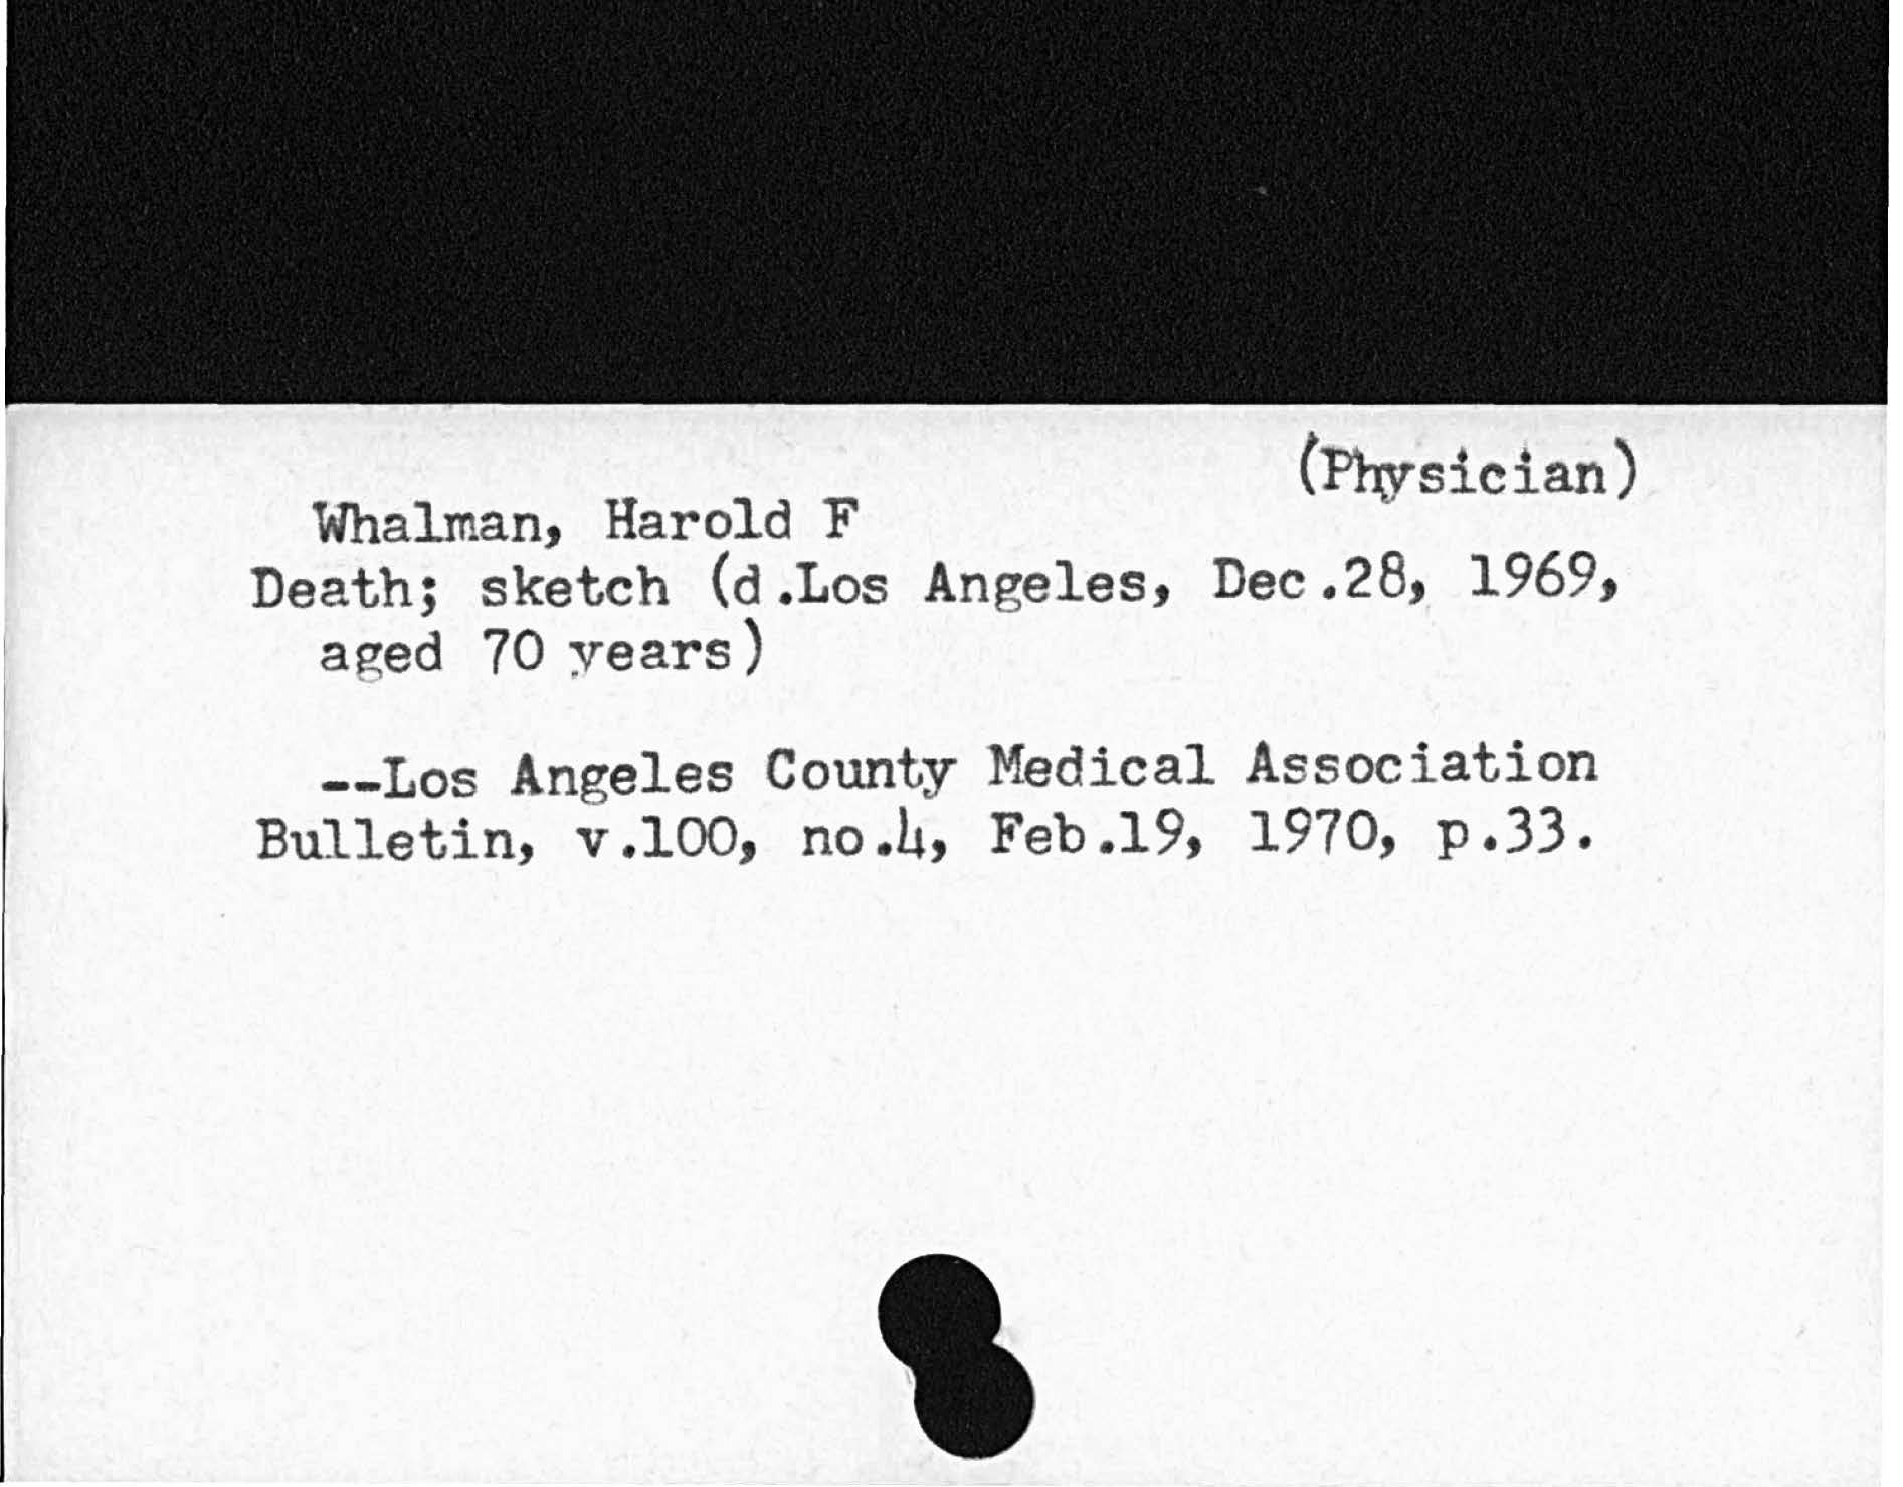 PhysicianWhalman, Harold FDeath; sketch d. Los Angeles, Dec. 28, 1969,aged 70 yearsLos Angeles County Medical AssociationBulletin, v. 100 no. 4, Feb. l9, 1970, p. 33